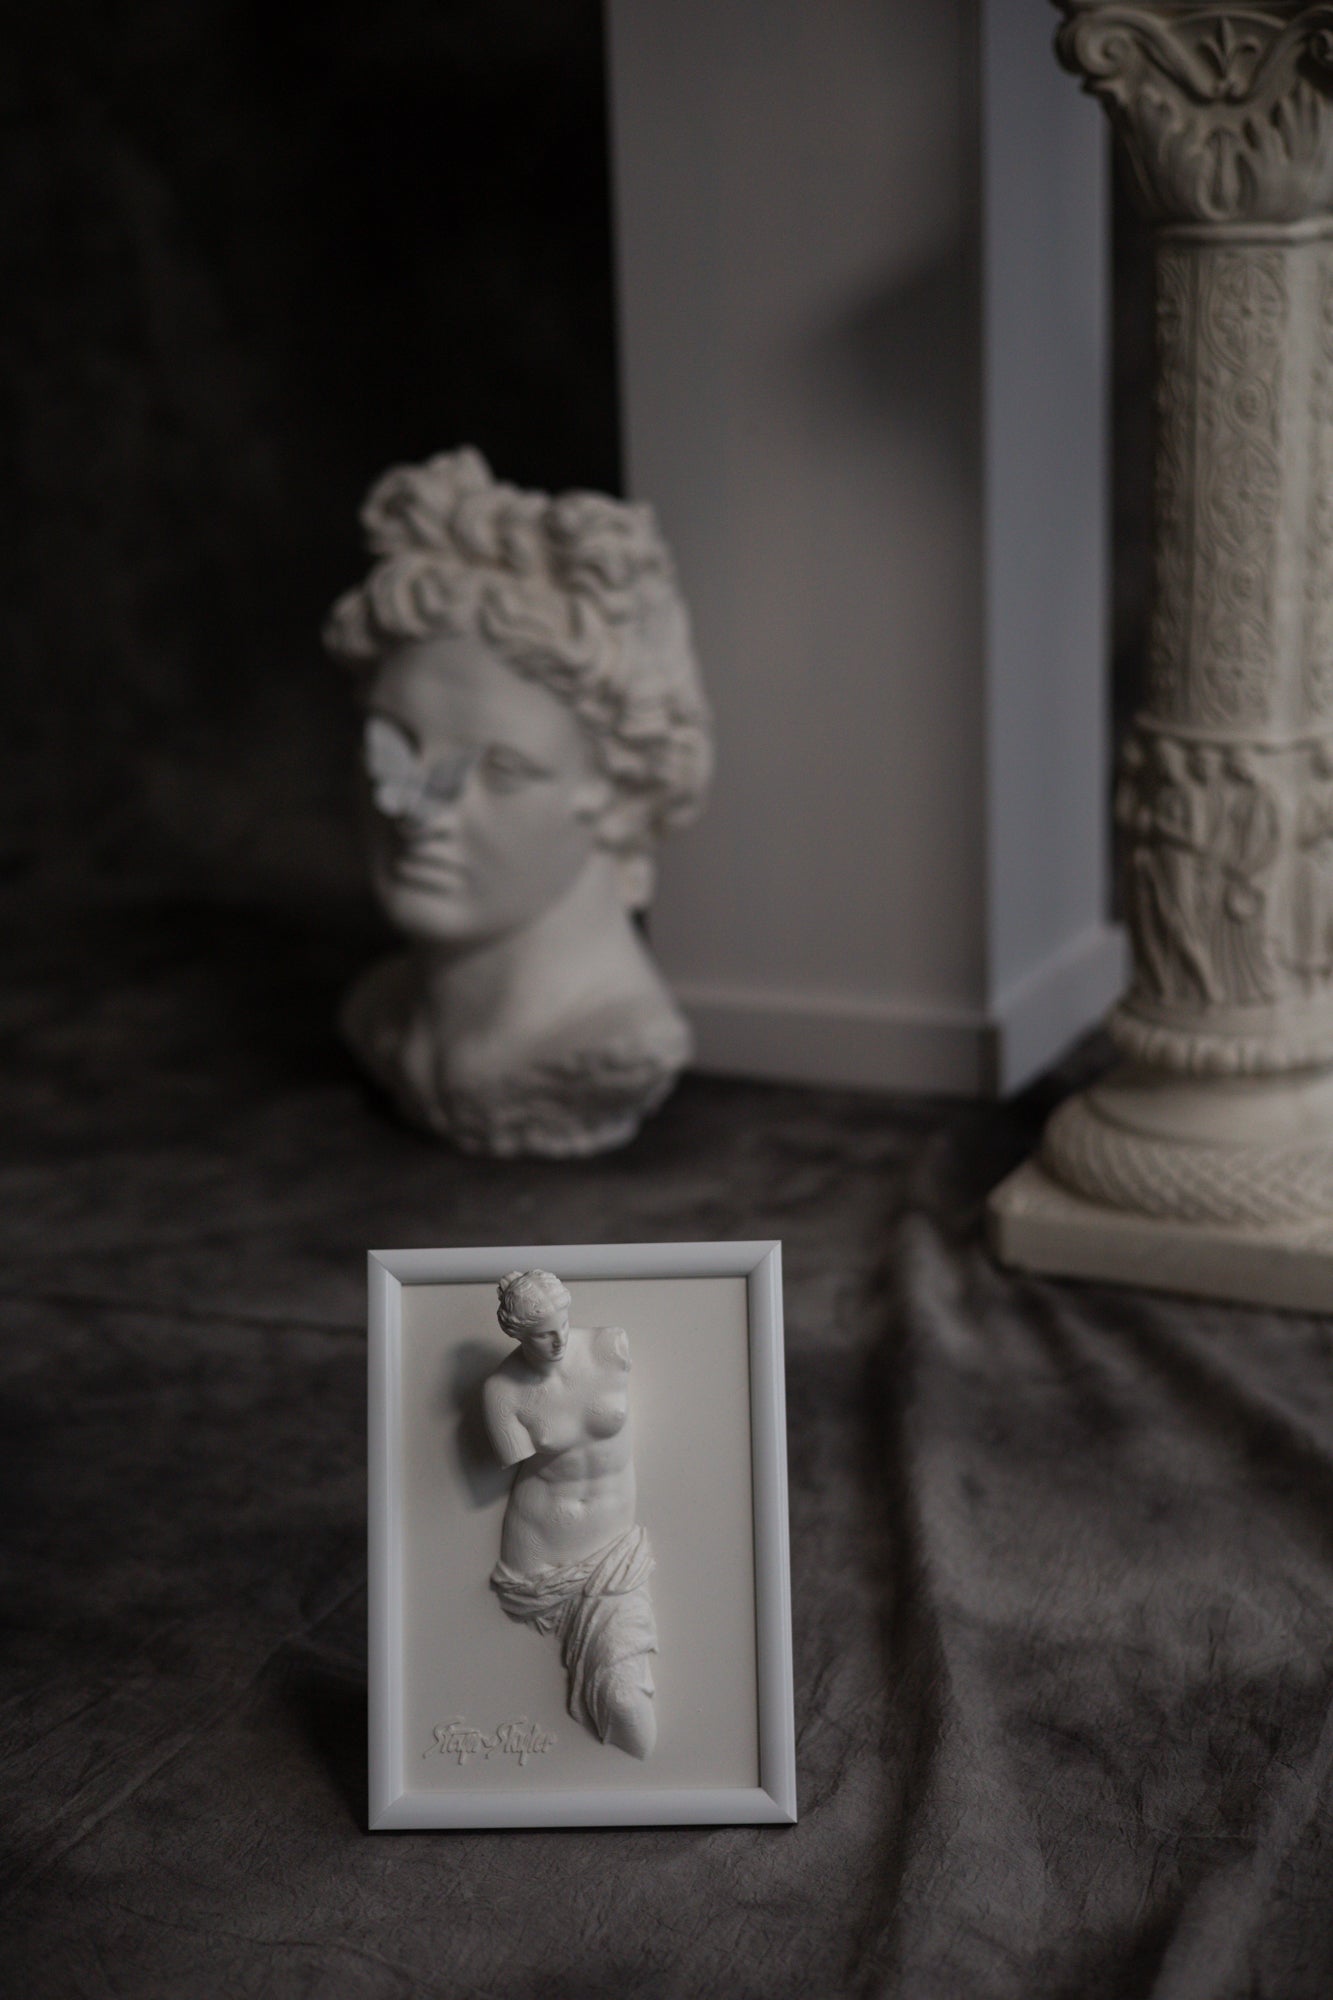 Venus De Milo (3D mini sculpture)